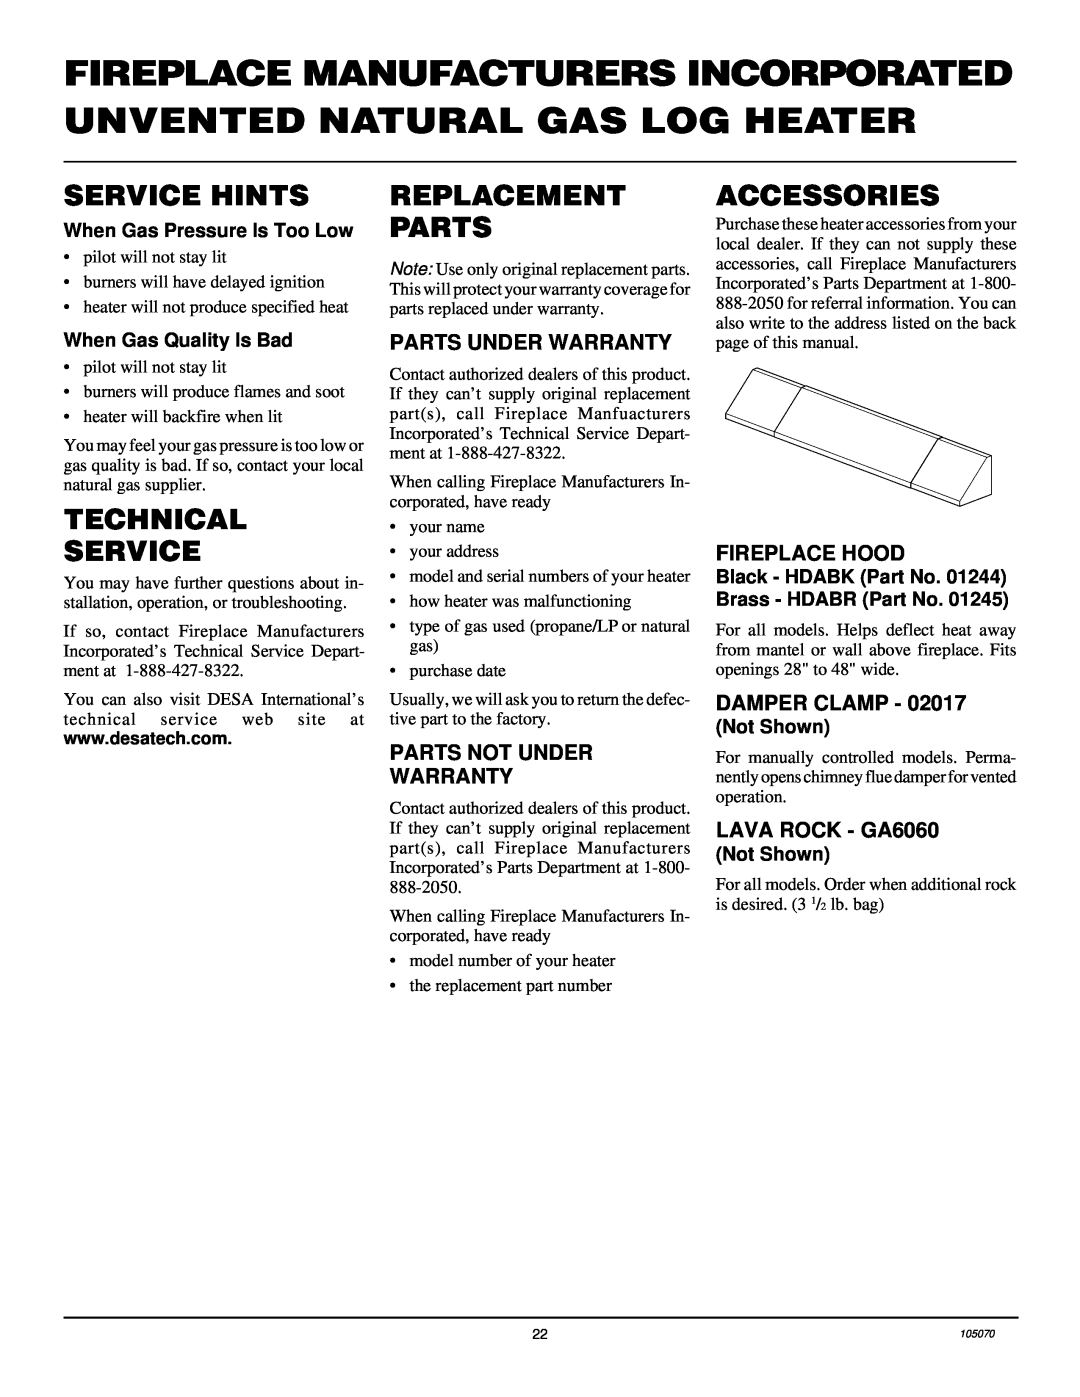 Desa VFN24MV VFN30MV Service Hints, Technical Service, Replacement Parts, Accessories, Parts Under Warranty, Damper Clamp 